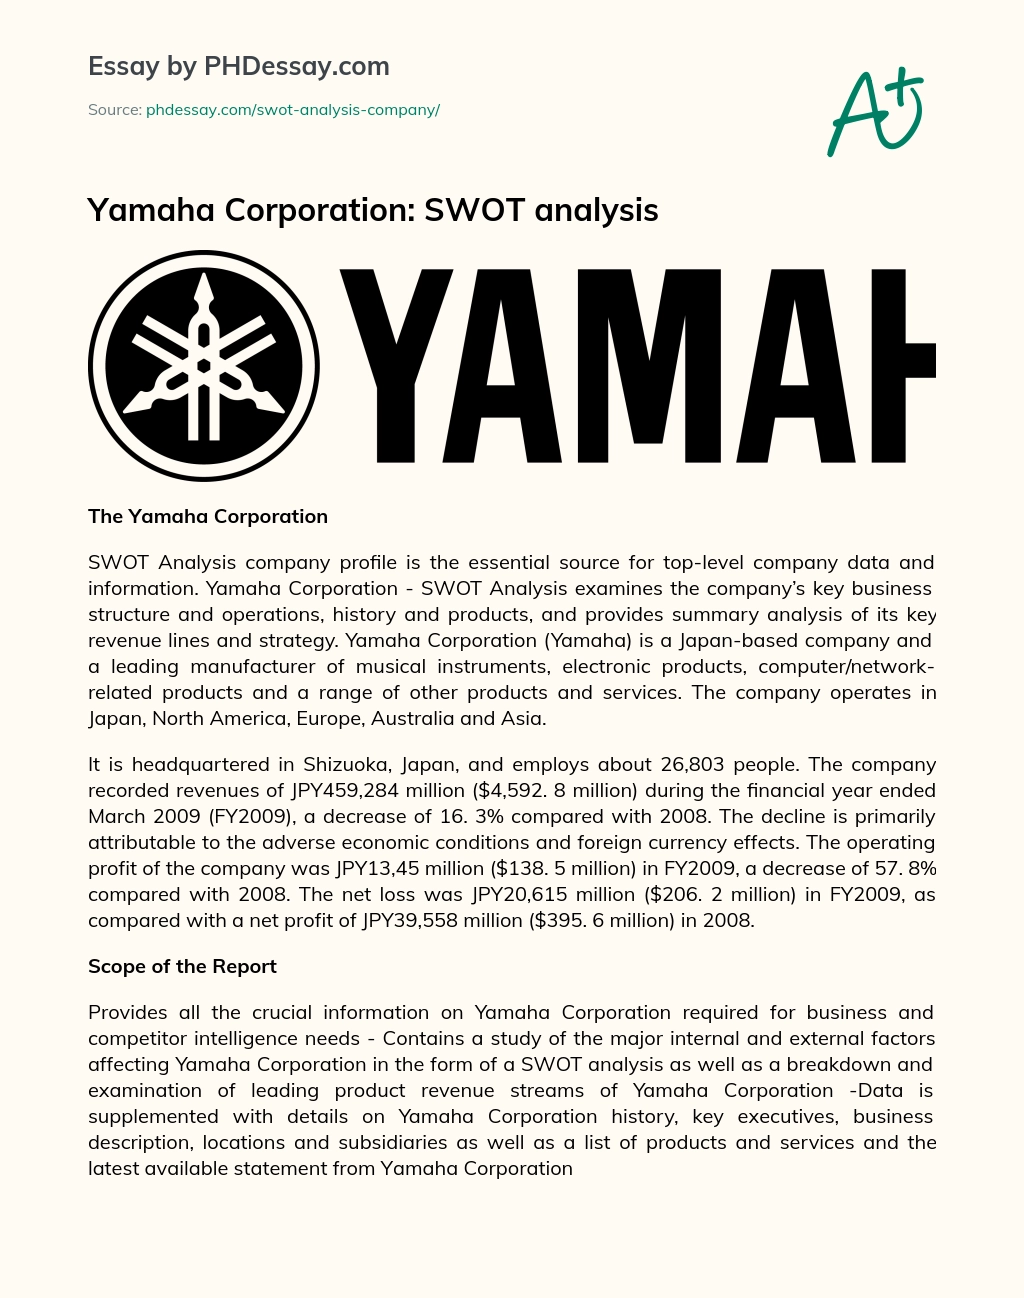 Yamaha Corporation: SWOT analysis essay